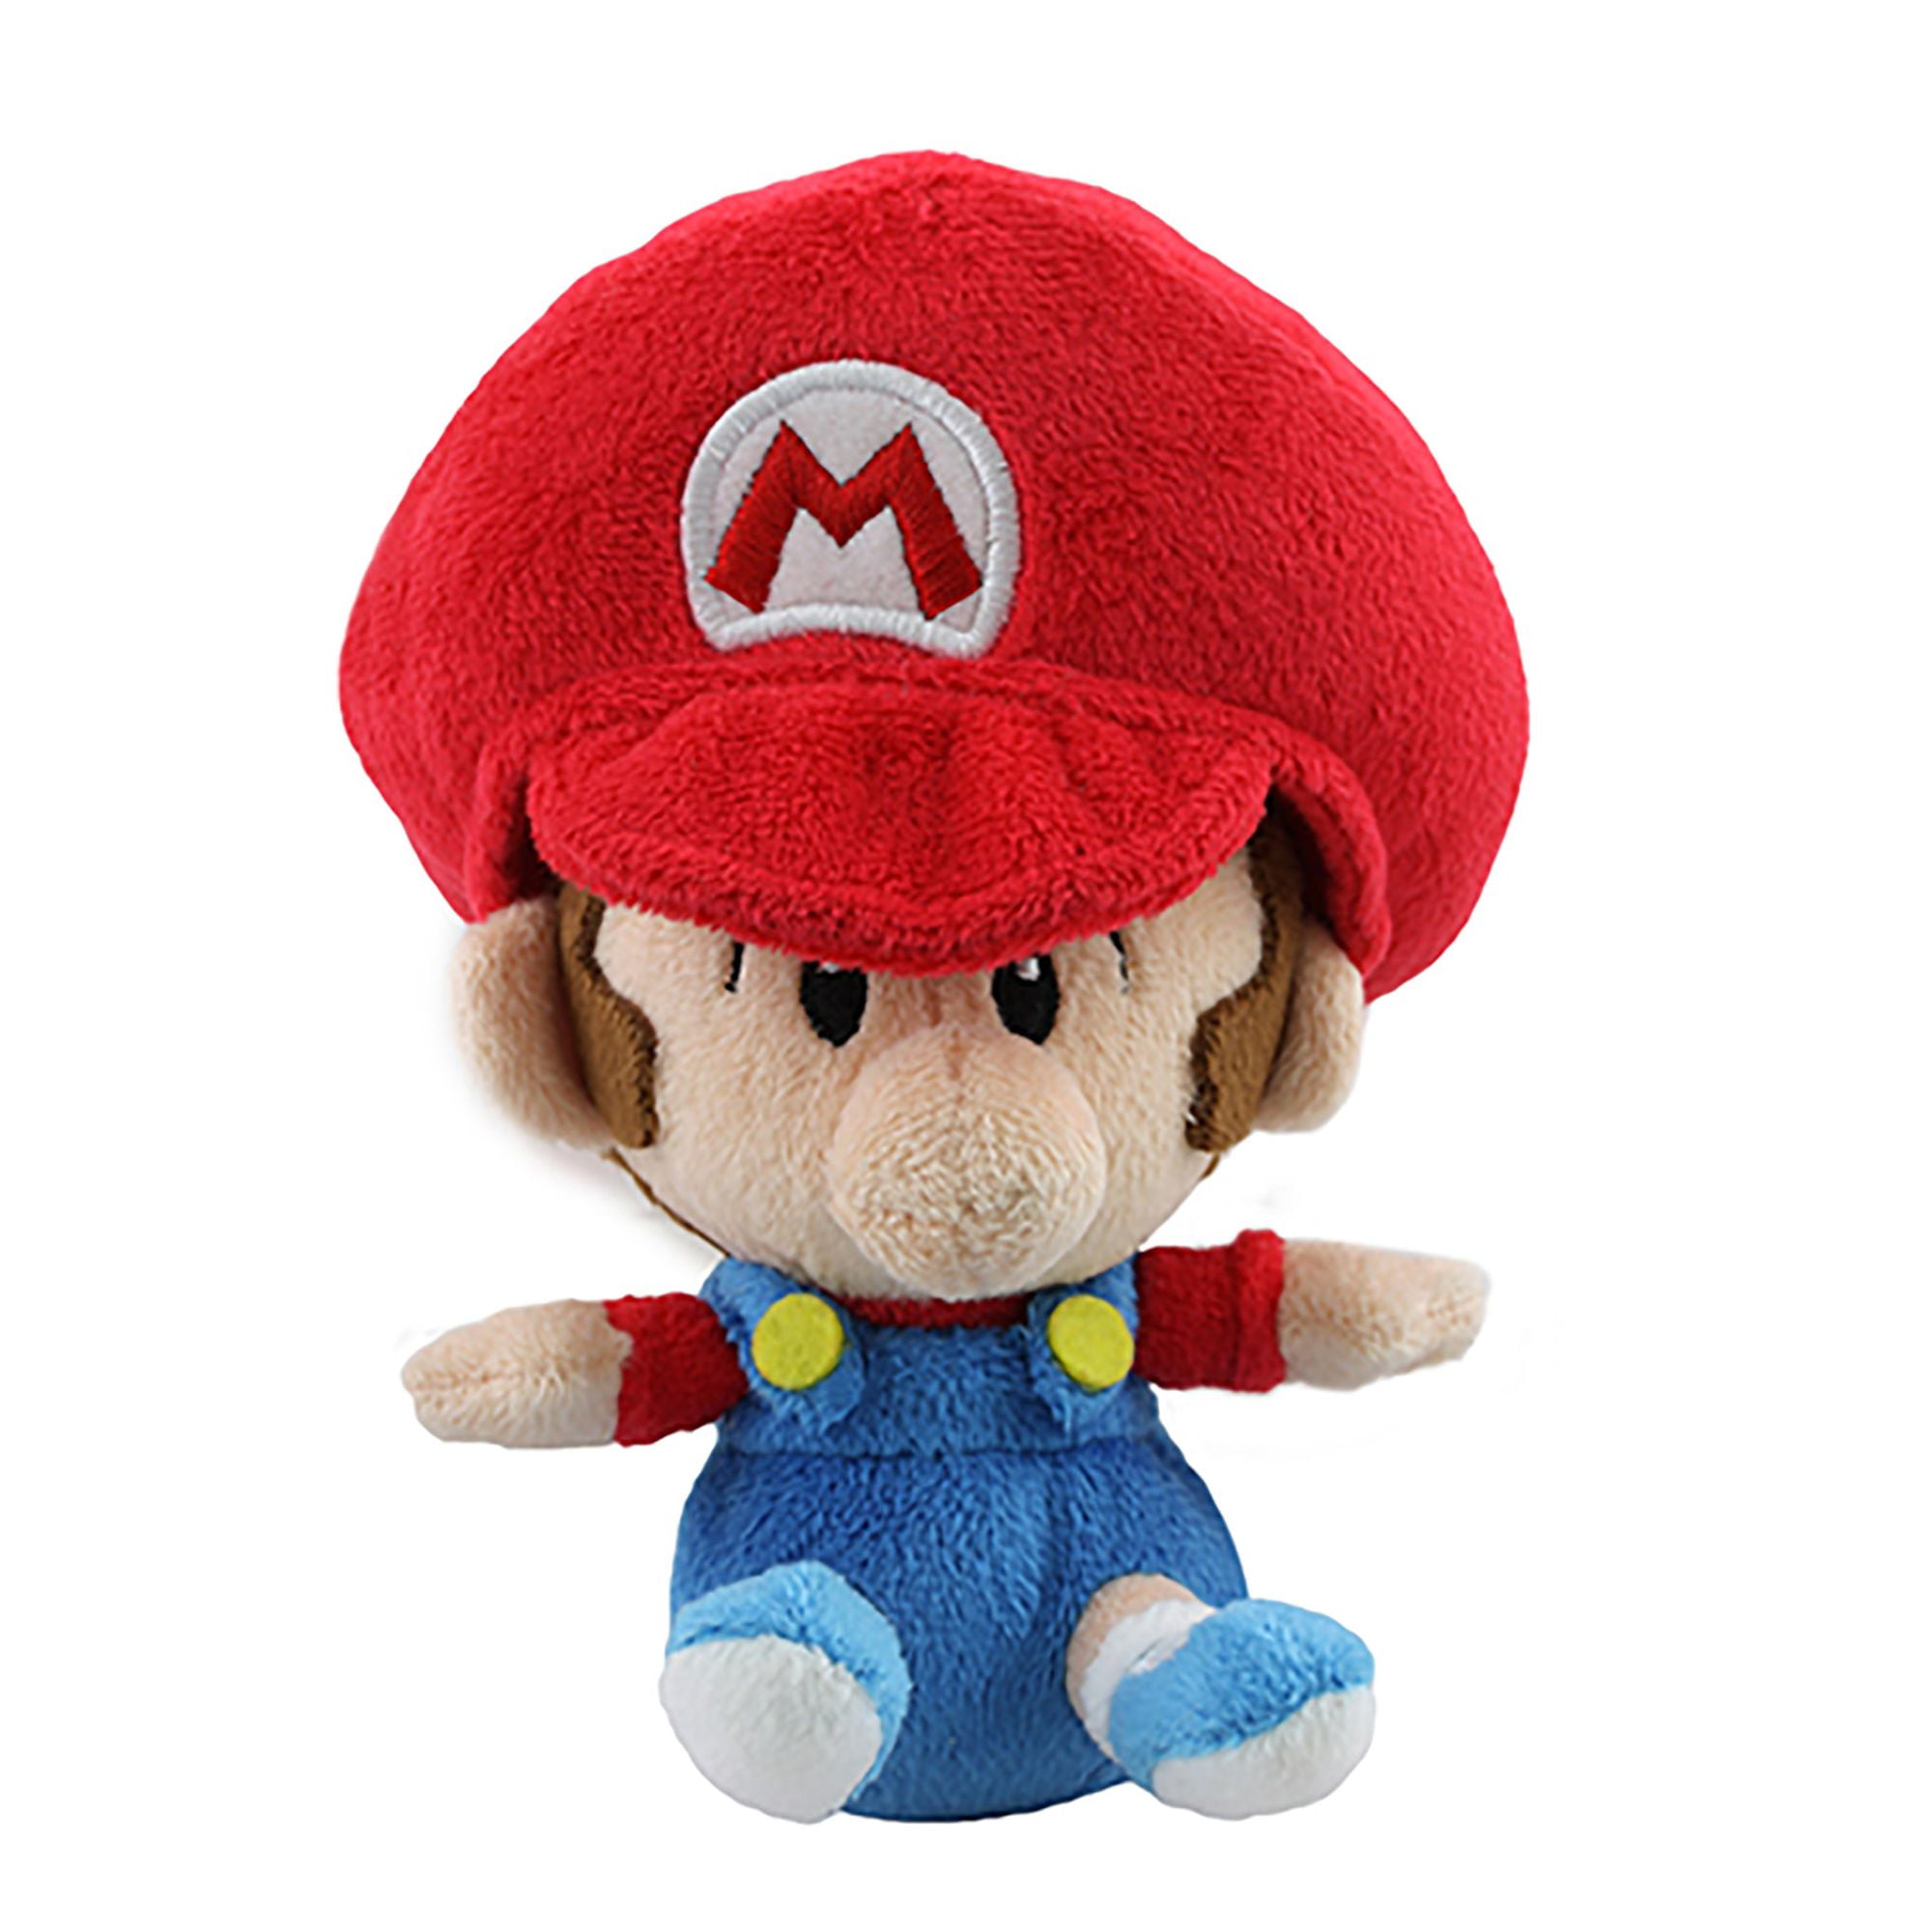 Super Mario Baby Daisy 6" Plush Toy